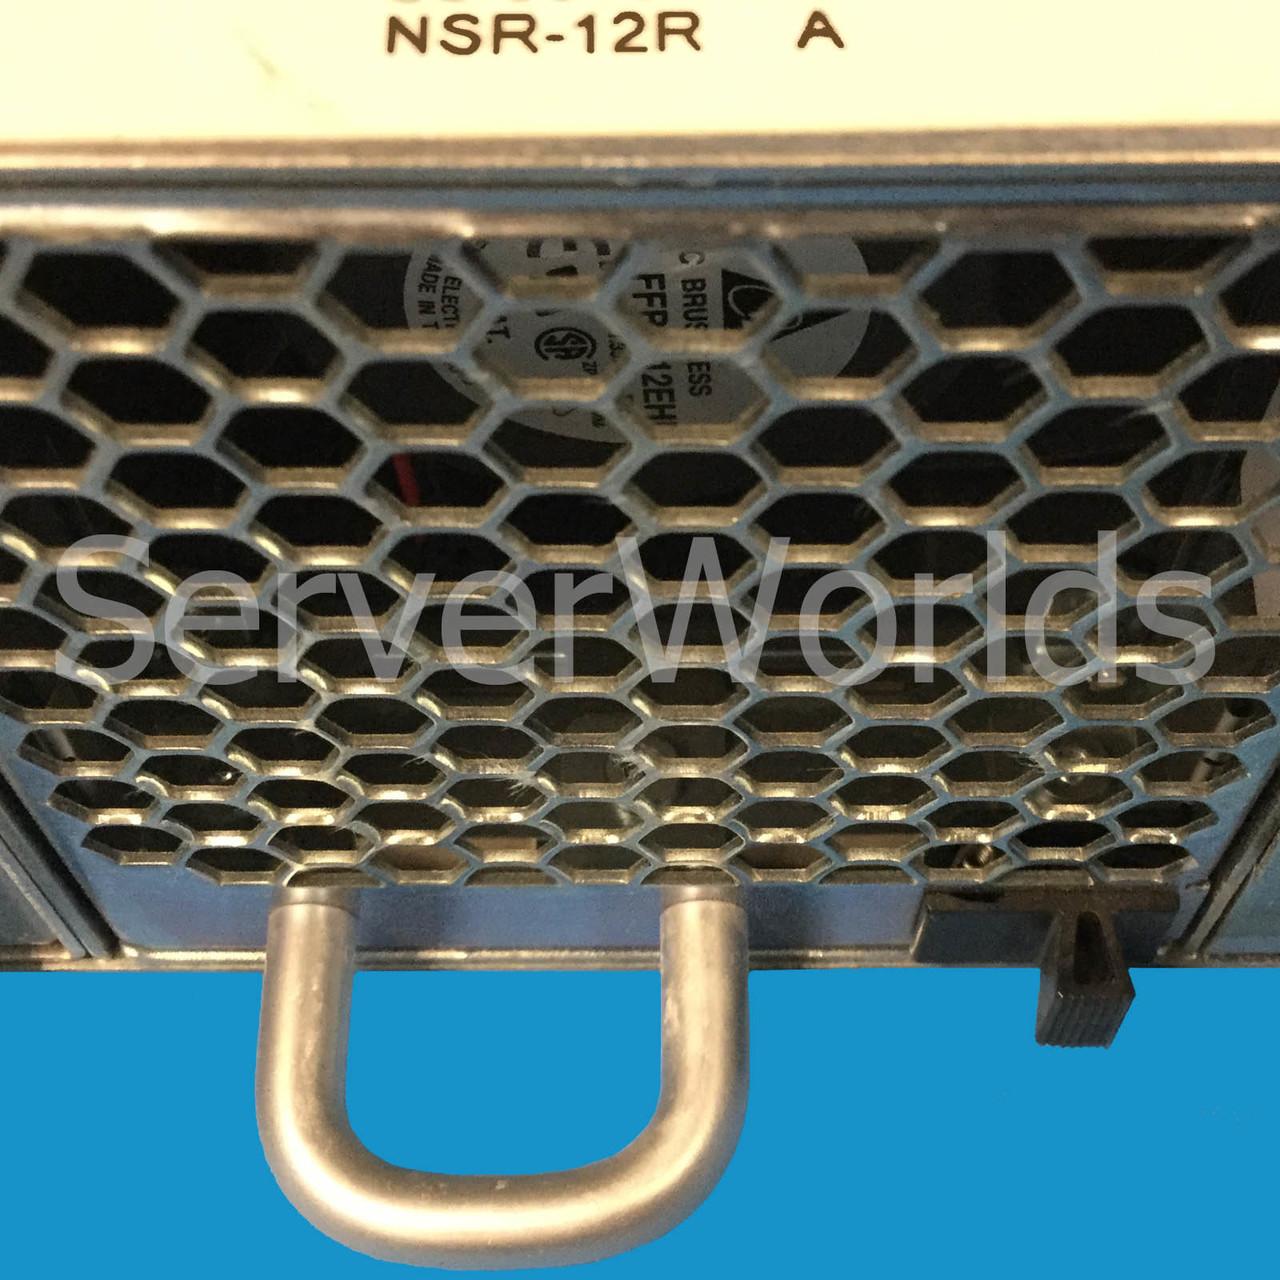 NexStor NSR-12R 12-Bay 3.5" Hard Drive Storage Array 819R101D